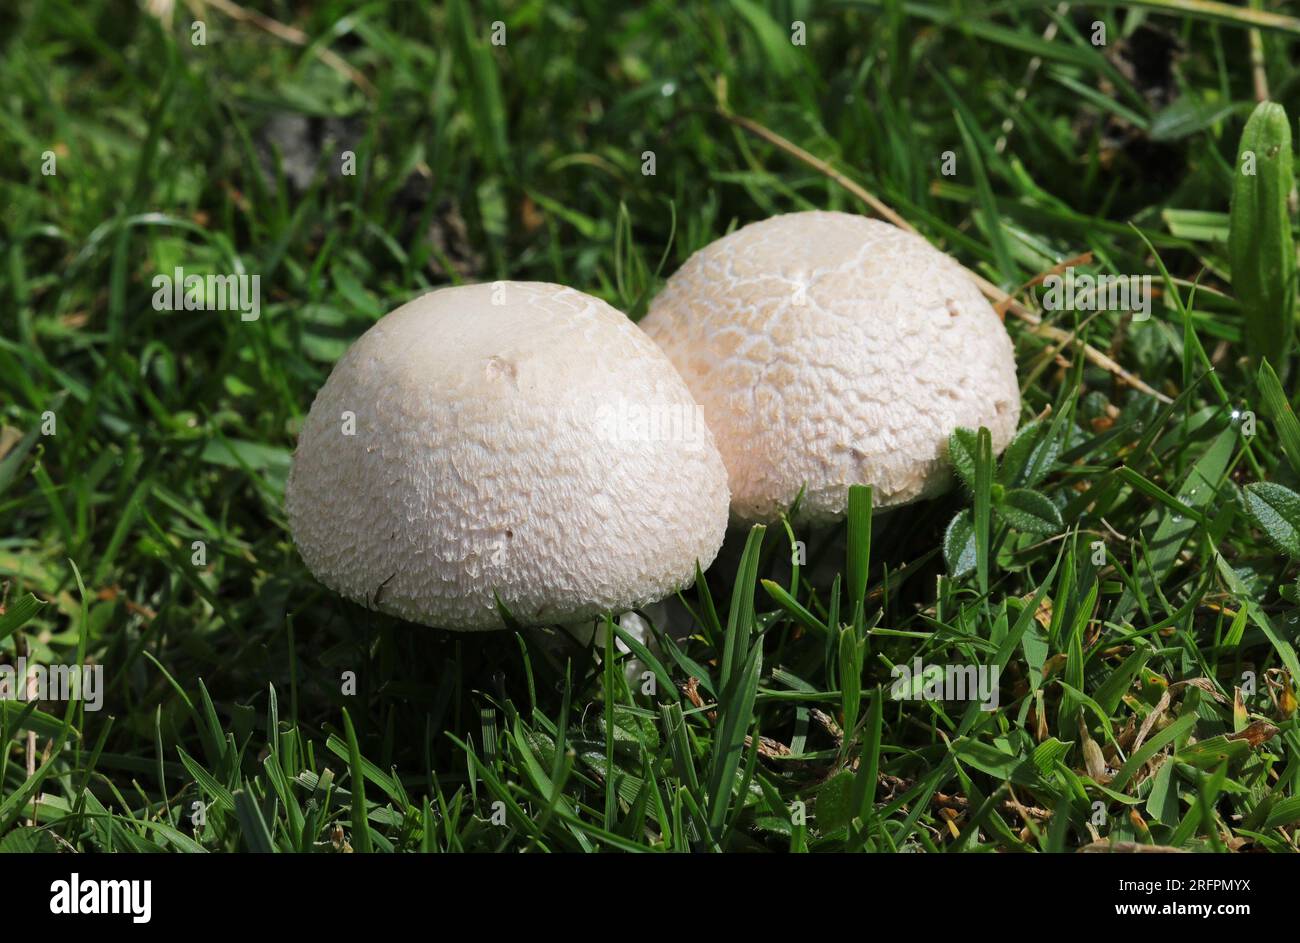 Agaricus campestris - Field mushroom Stock Photo